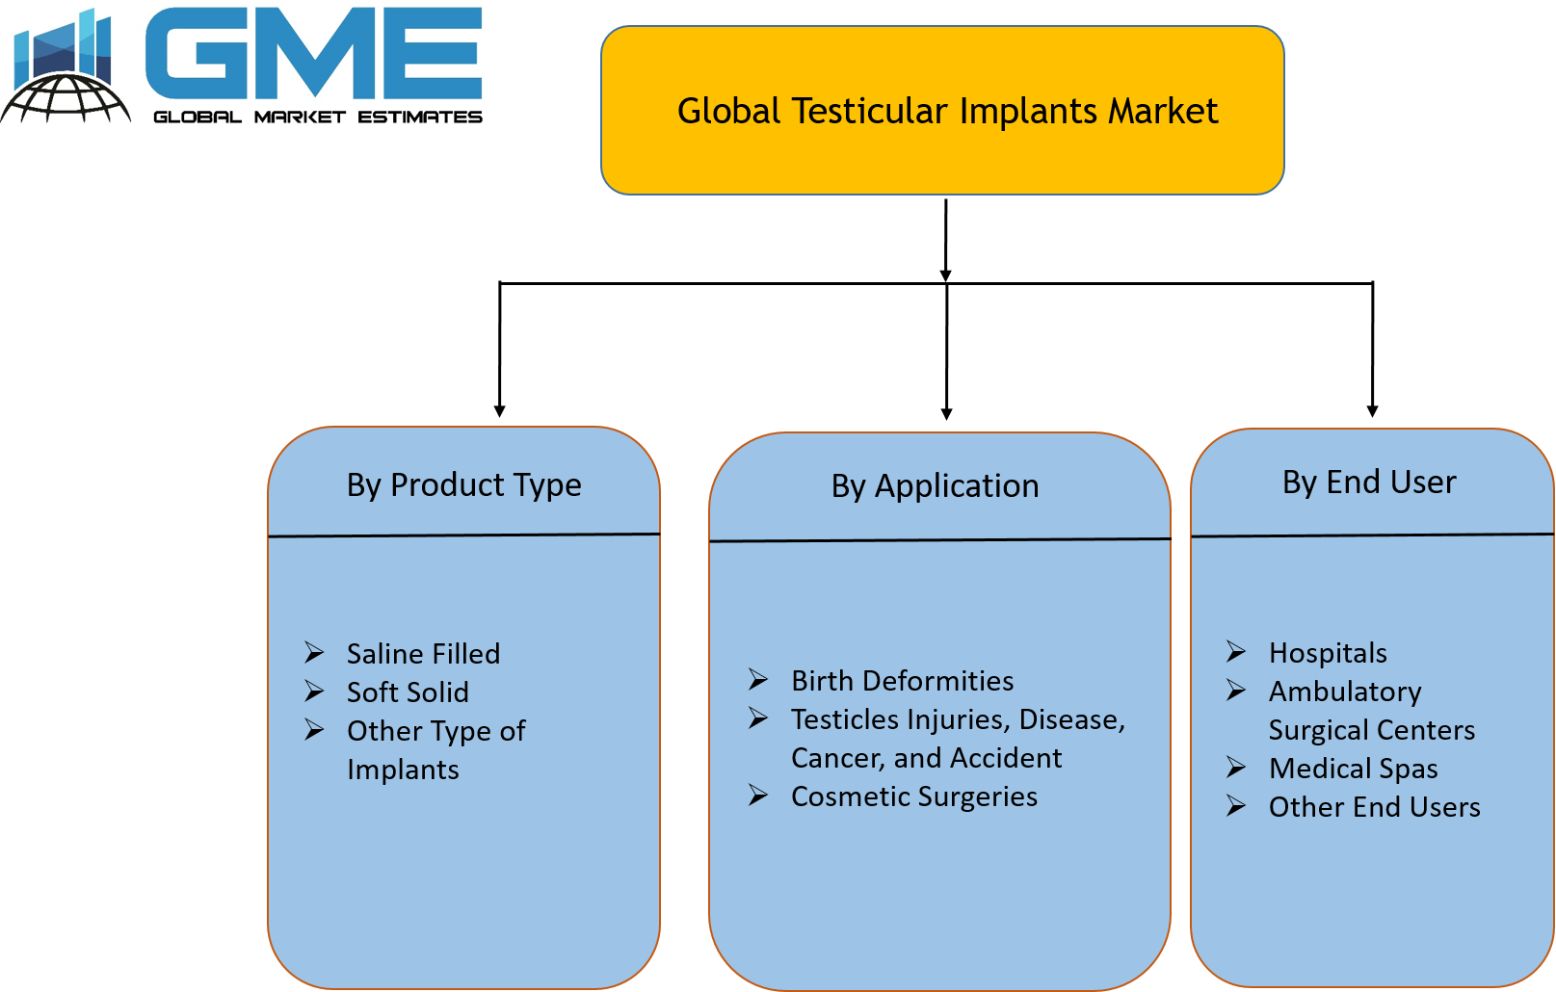 Global Testicular Implants Market Segmentation